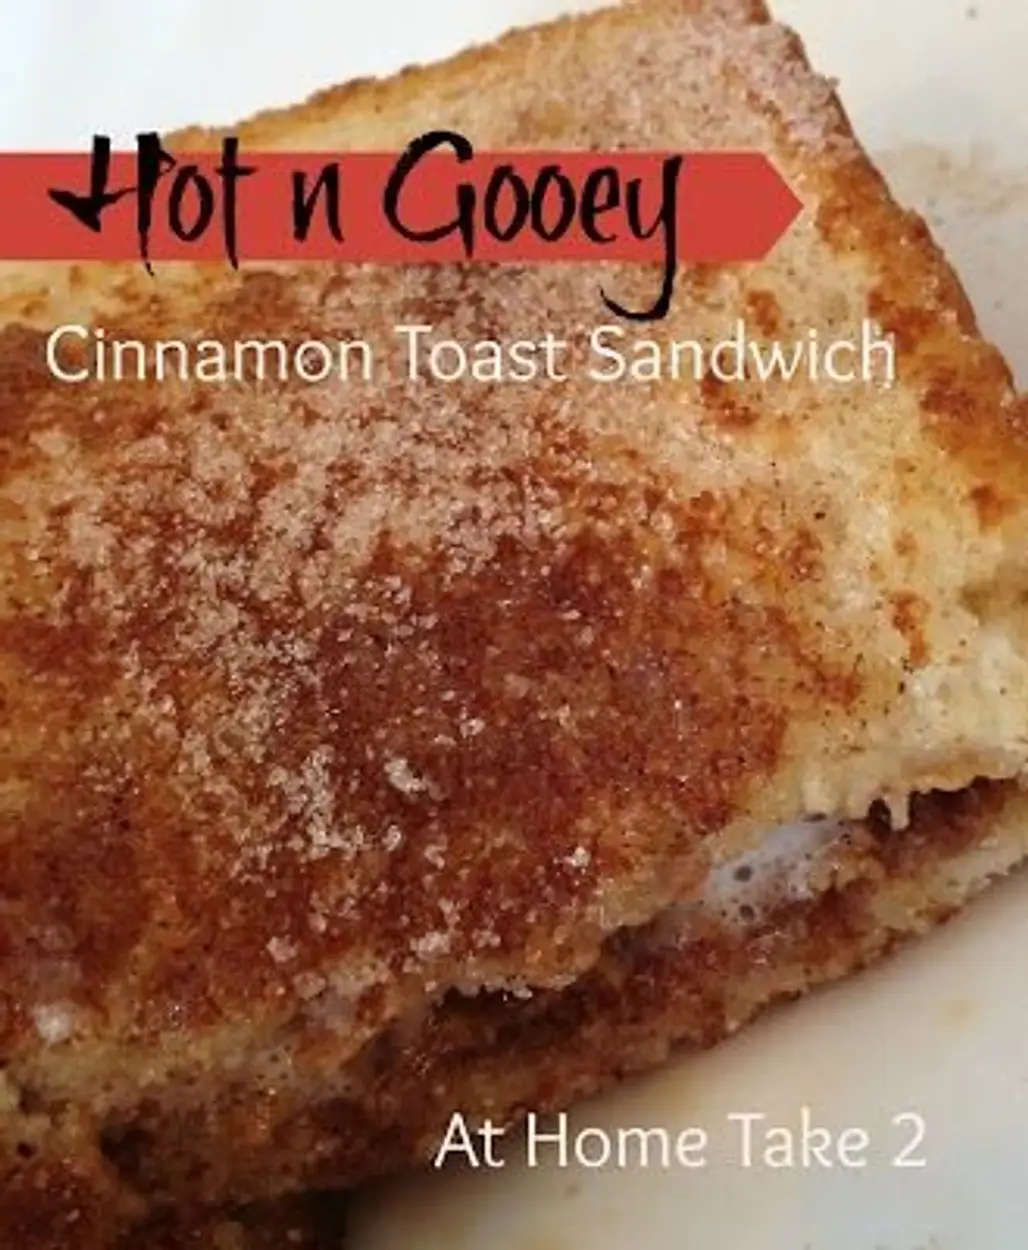 Hot and Gooey Cinnamon Toast Sandwich